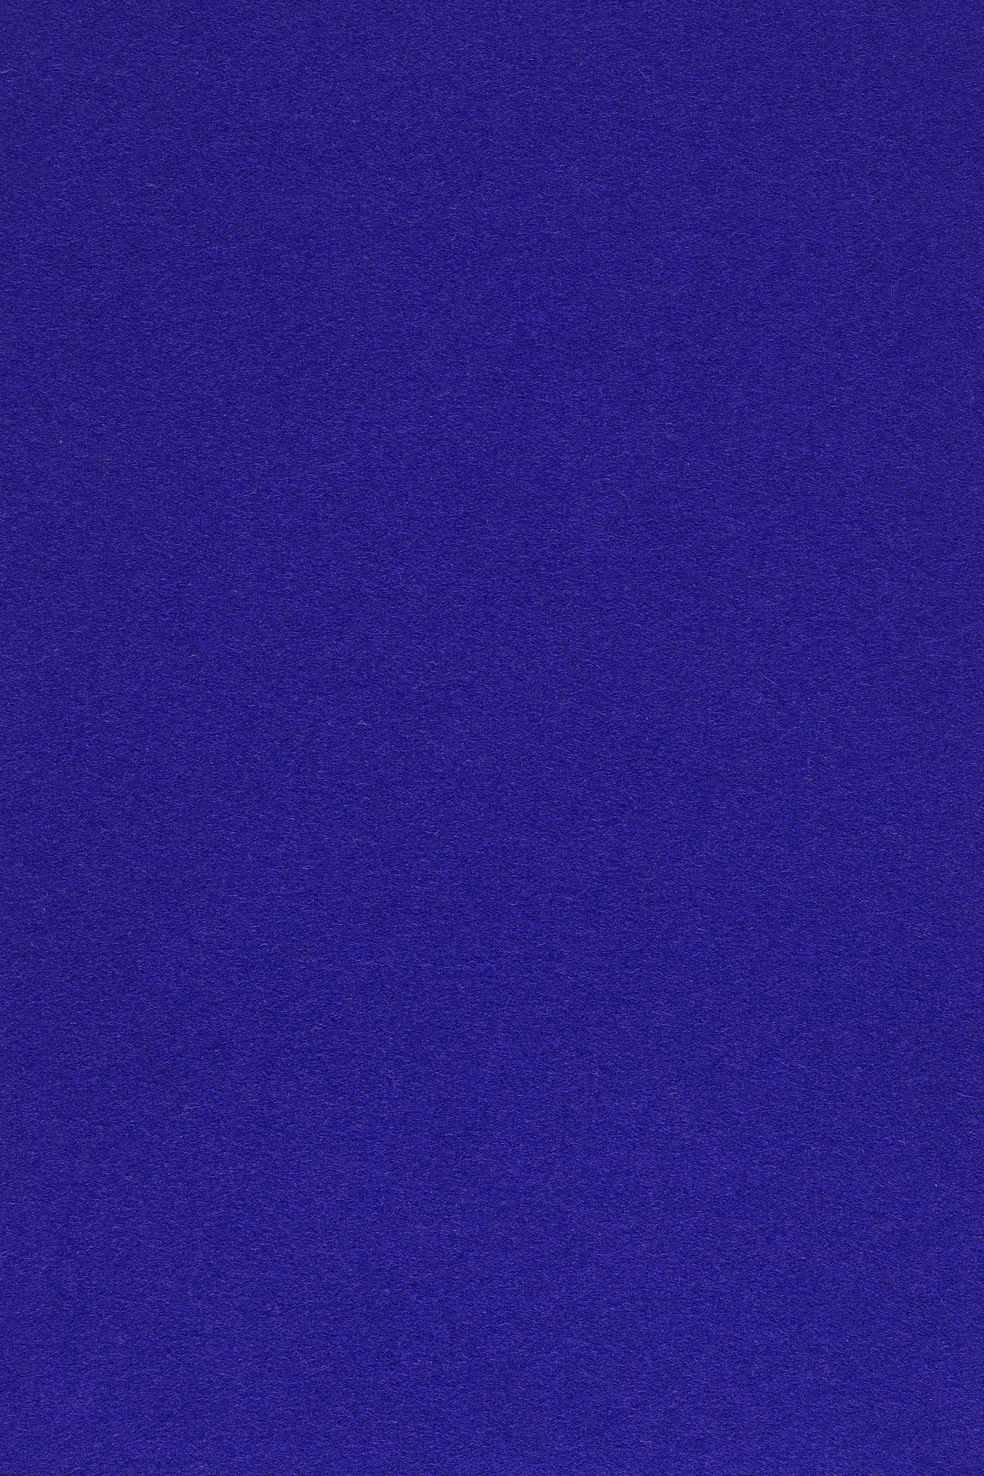 Fabric sample Divina 3 686 blue